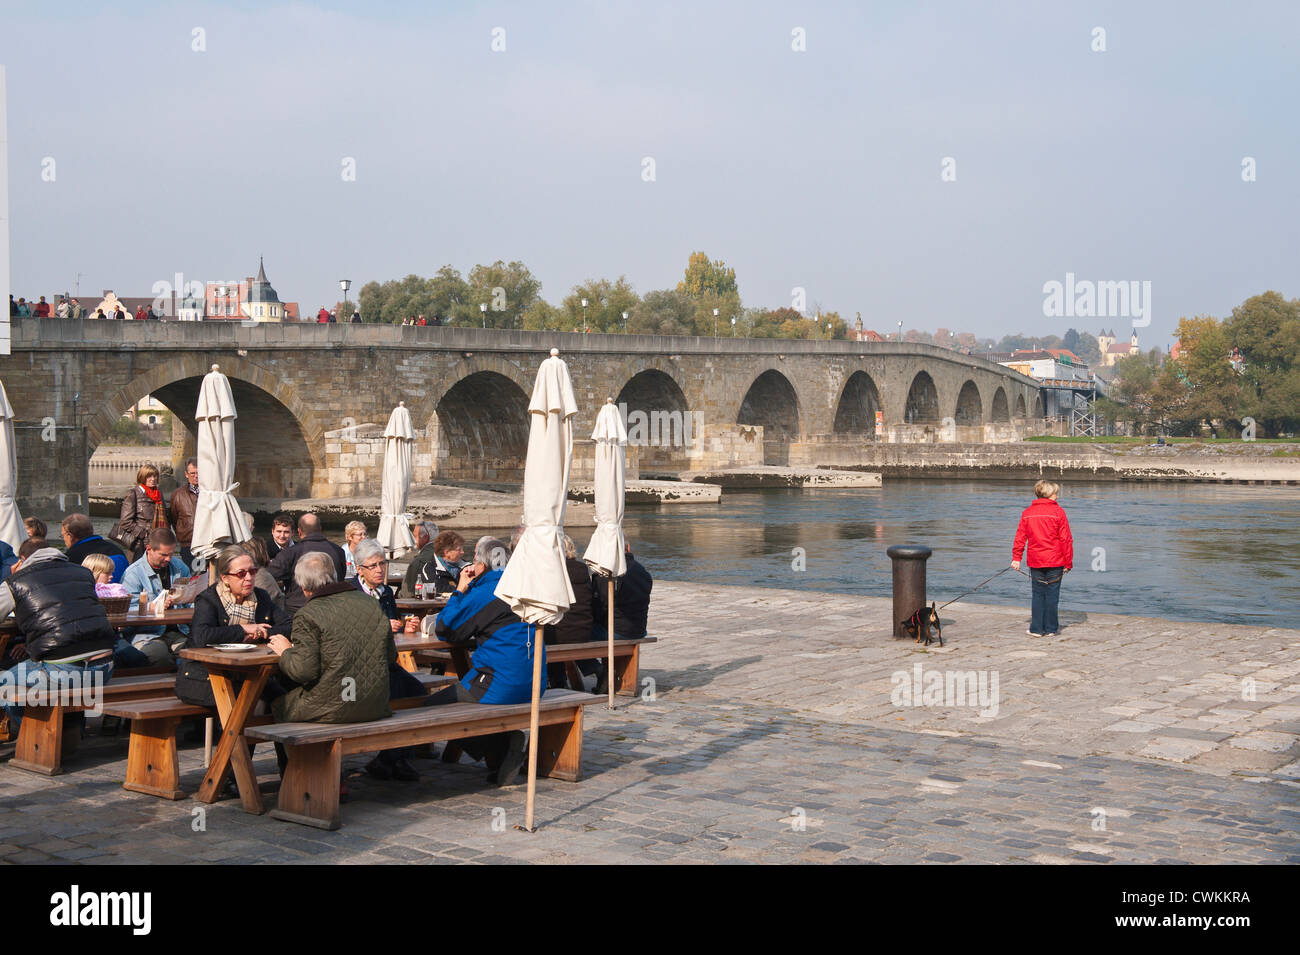 Historic Roman Steinerne Brucke (bridge) over the Danube and the historic Sausage Kitchen restaurant Regensburg, Germany. Stock Photo